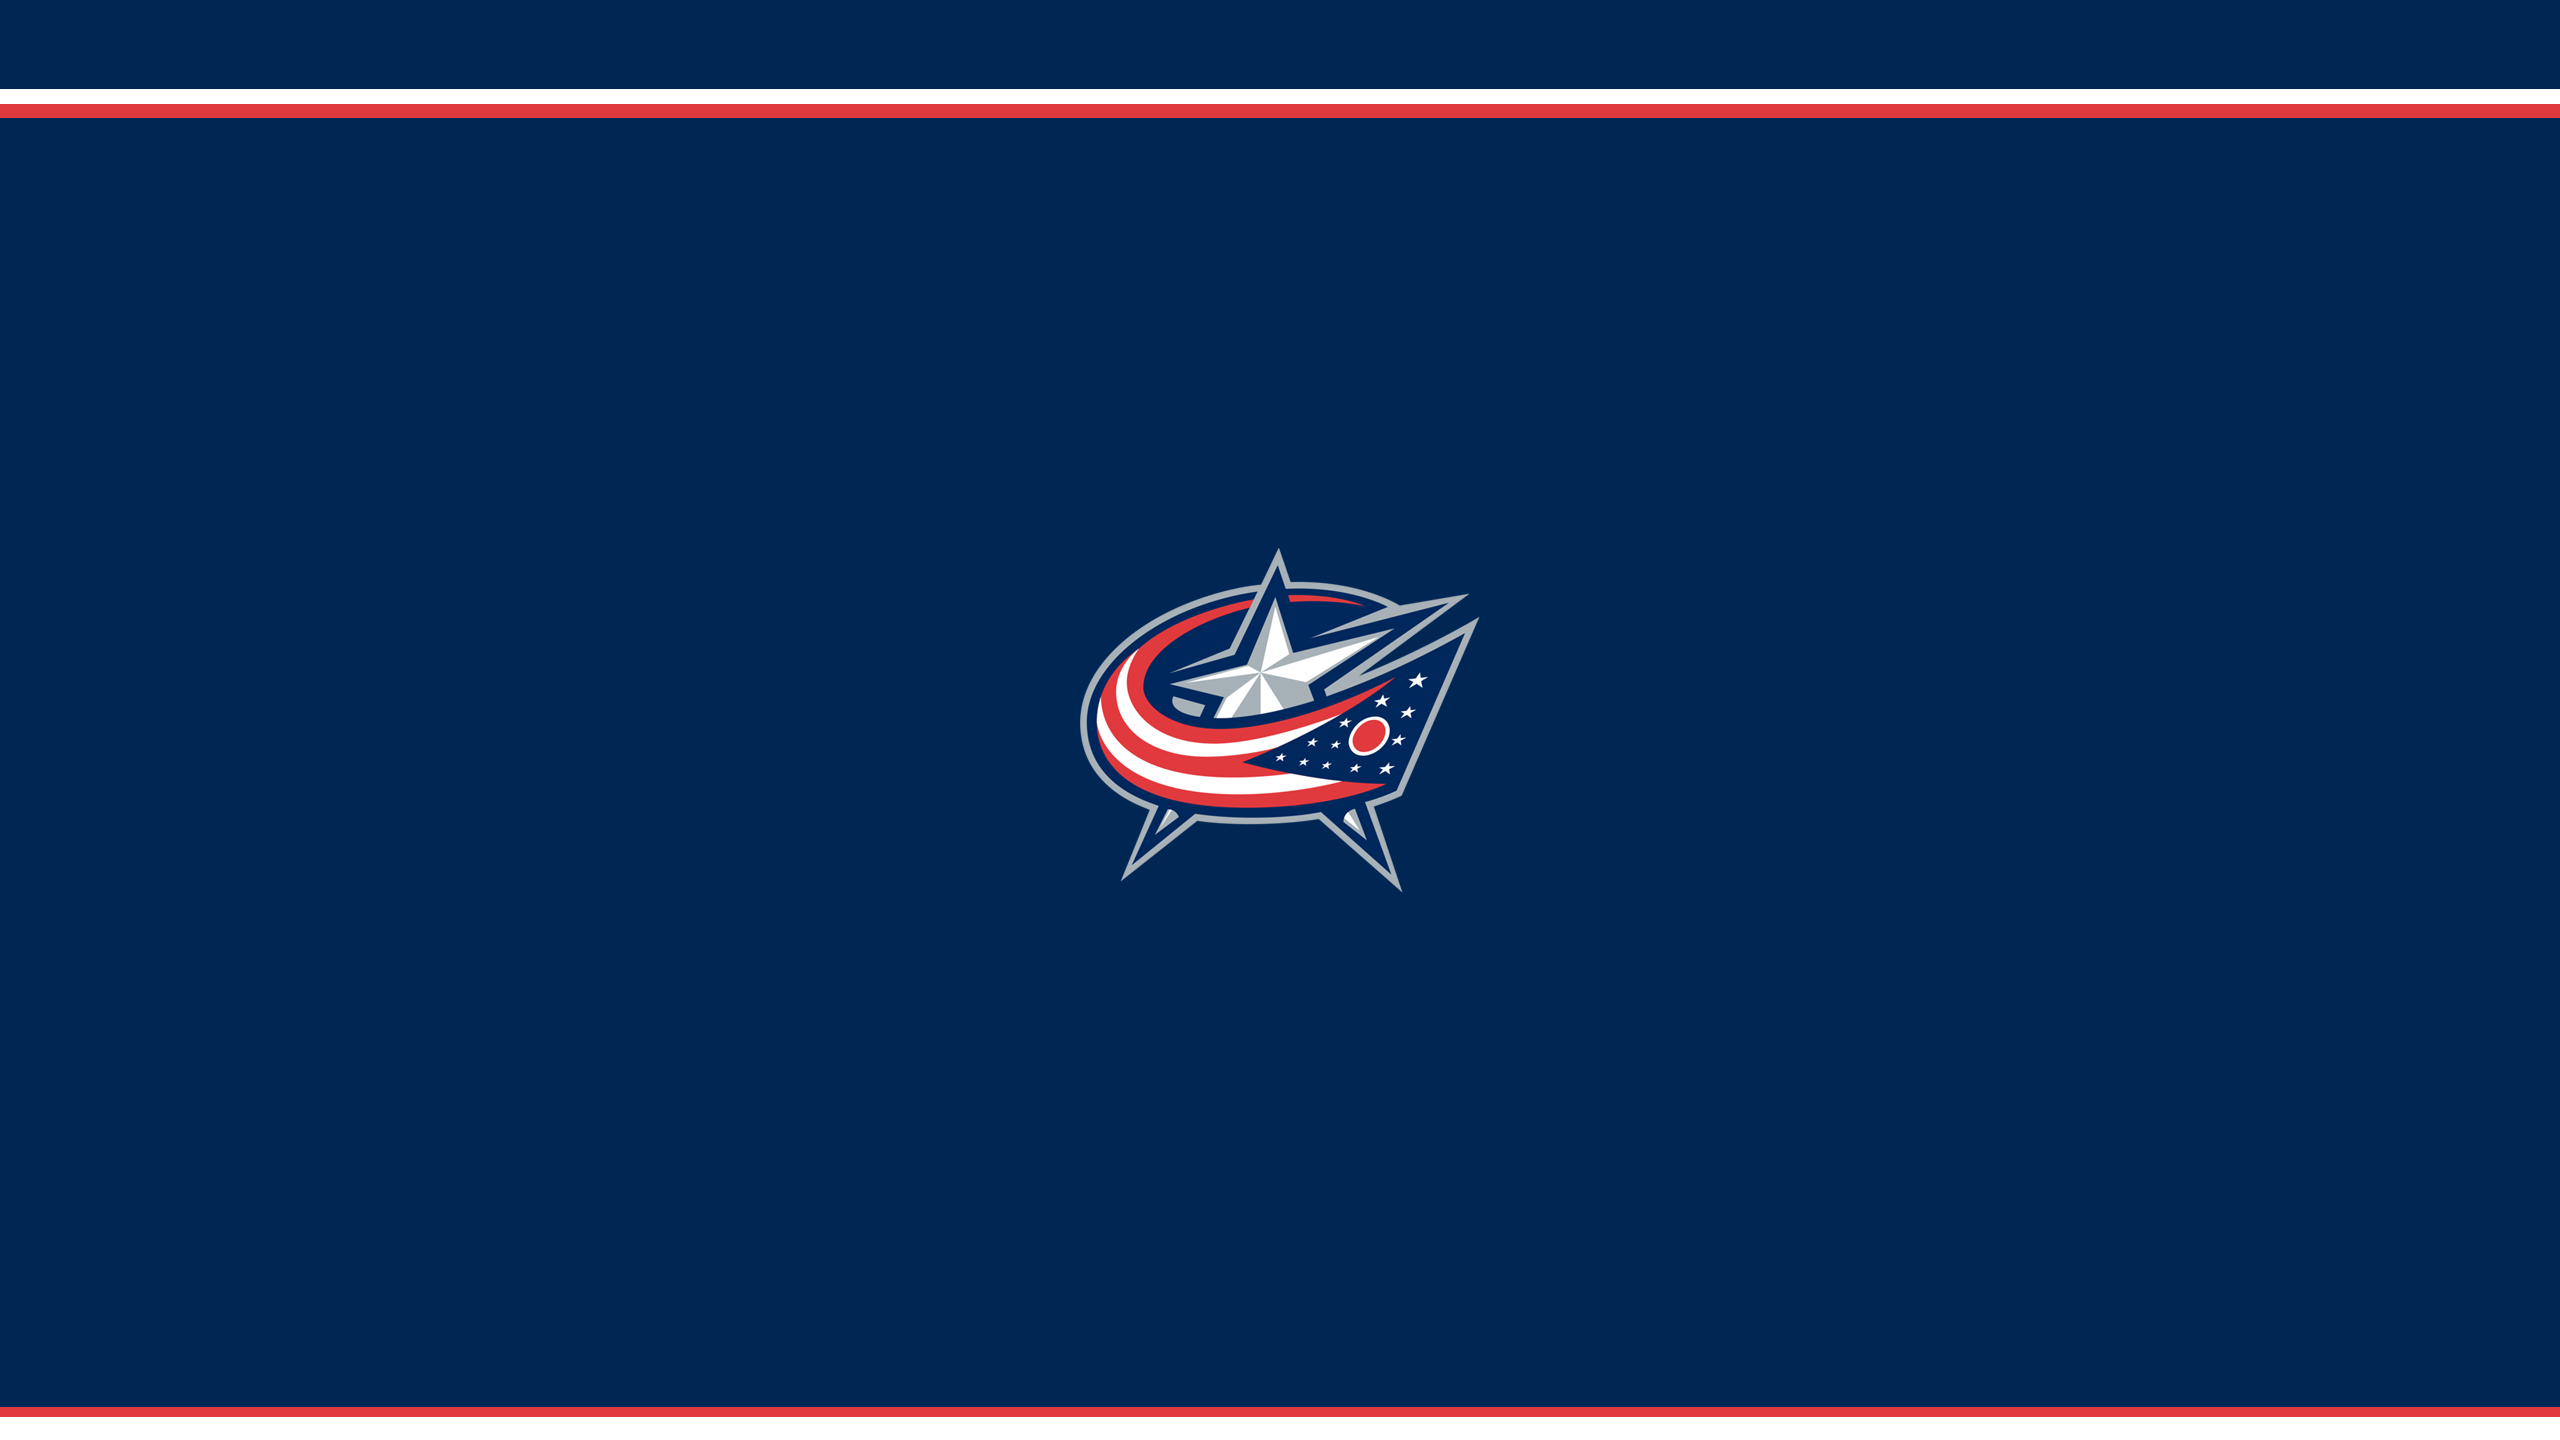 Columbus Blue Jackets - NHL - Square Bettor